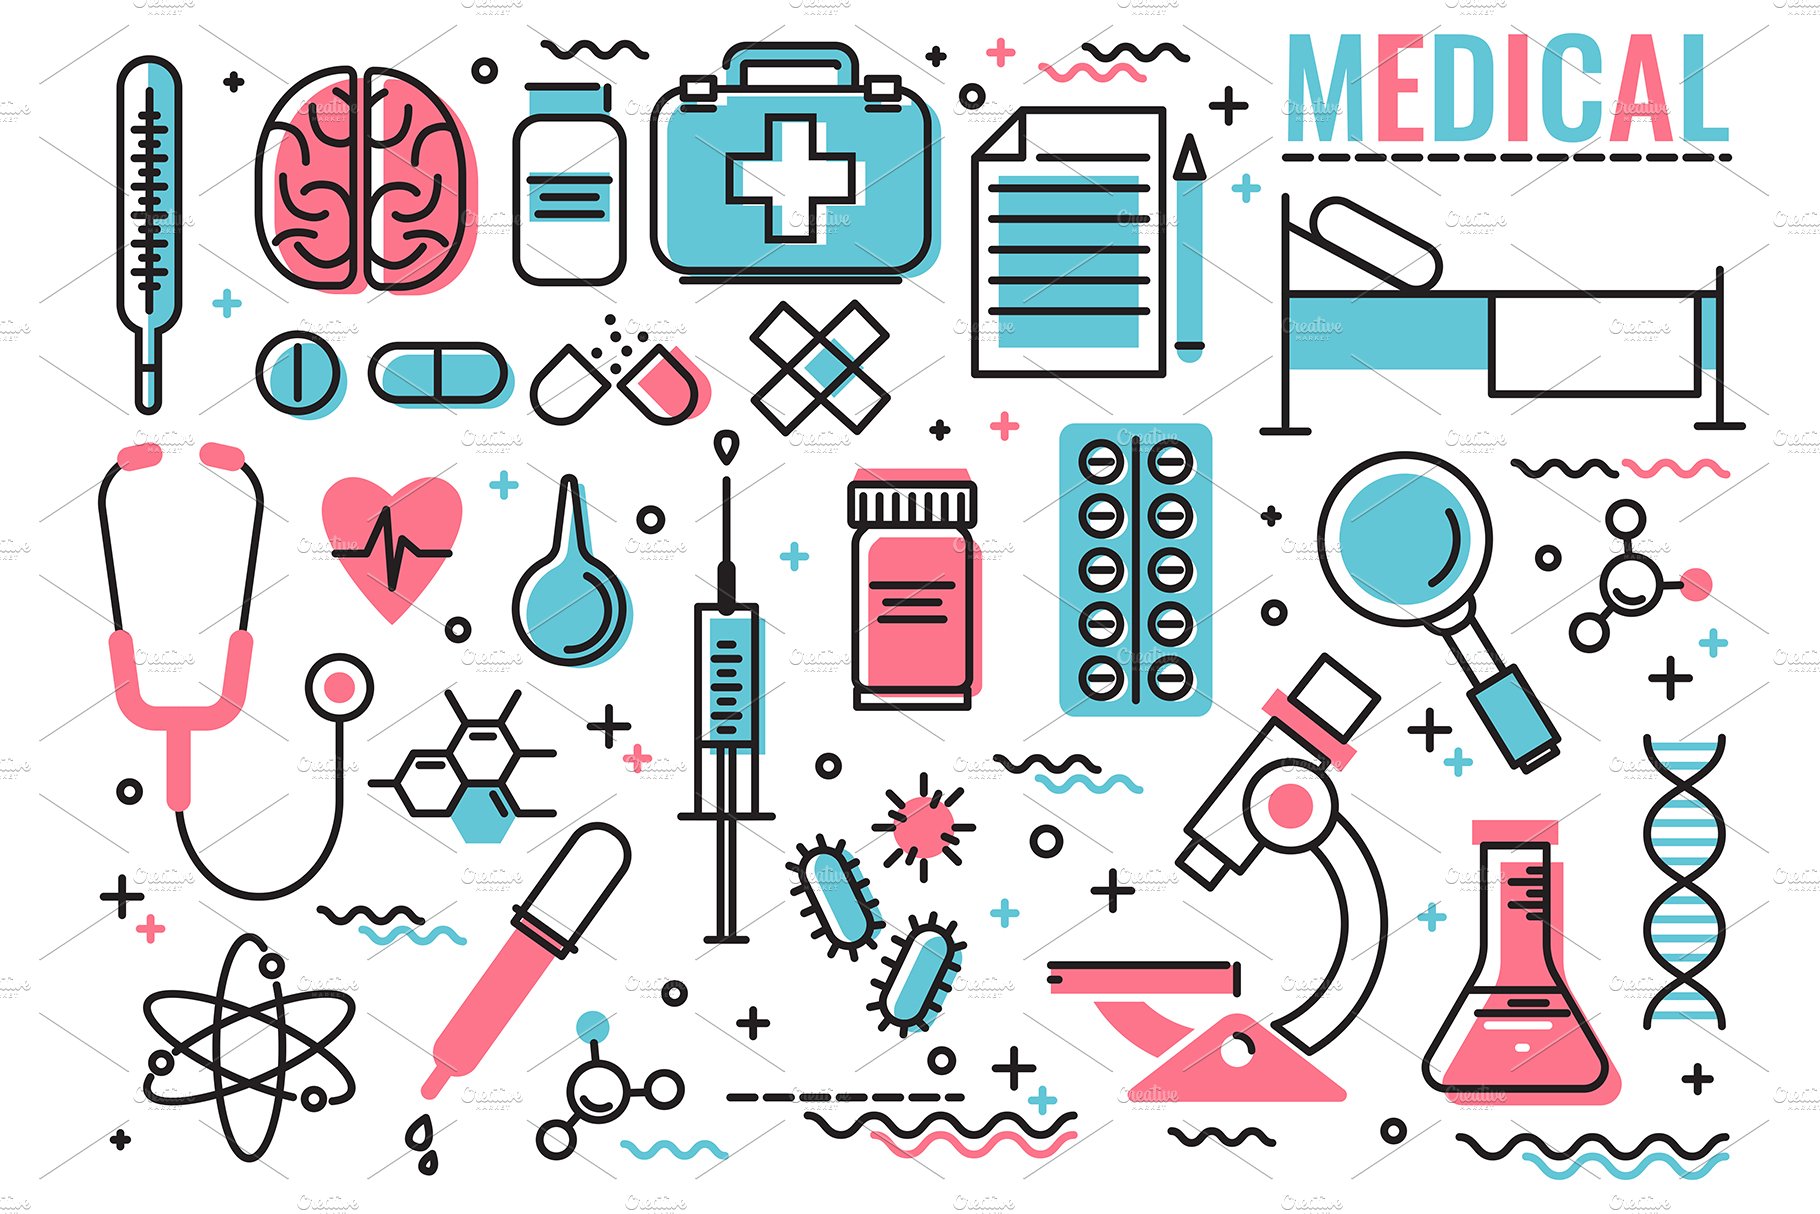 Medicine, science cover image.